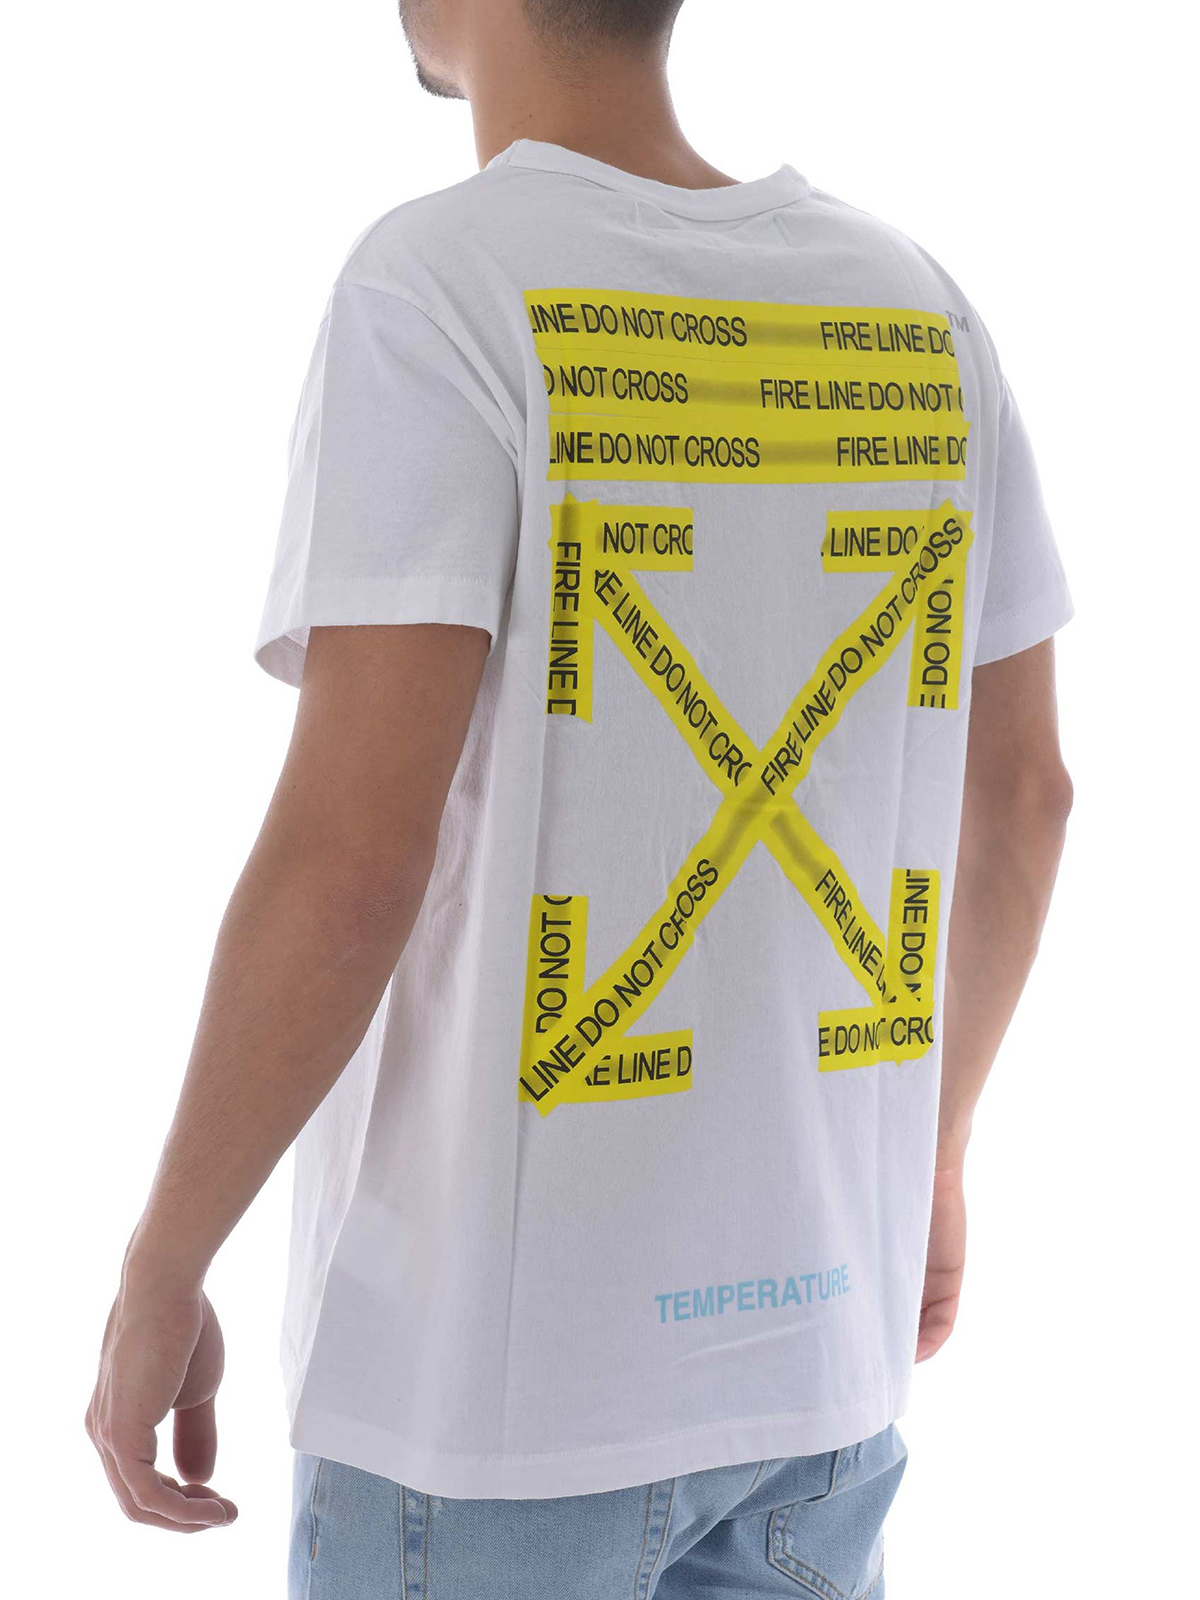 sammenbrud opdragelse Kollektive T-shirts Off-White - Firetape white T-shirt - OMAA002S181850060160